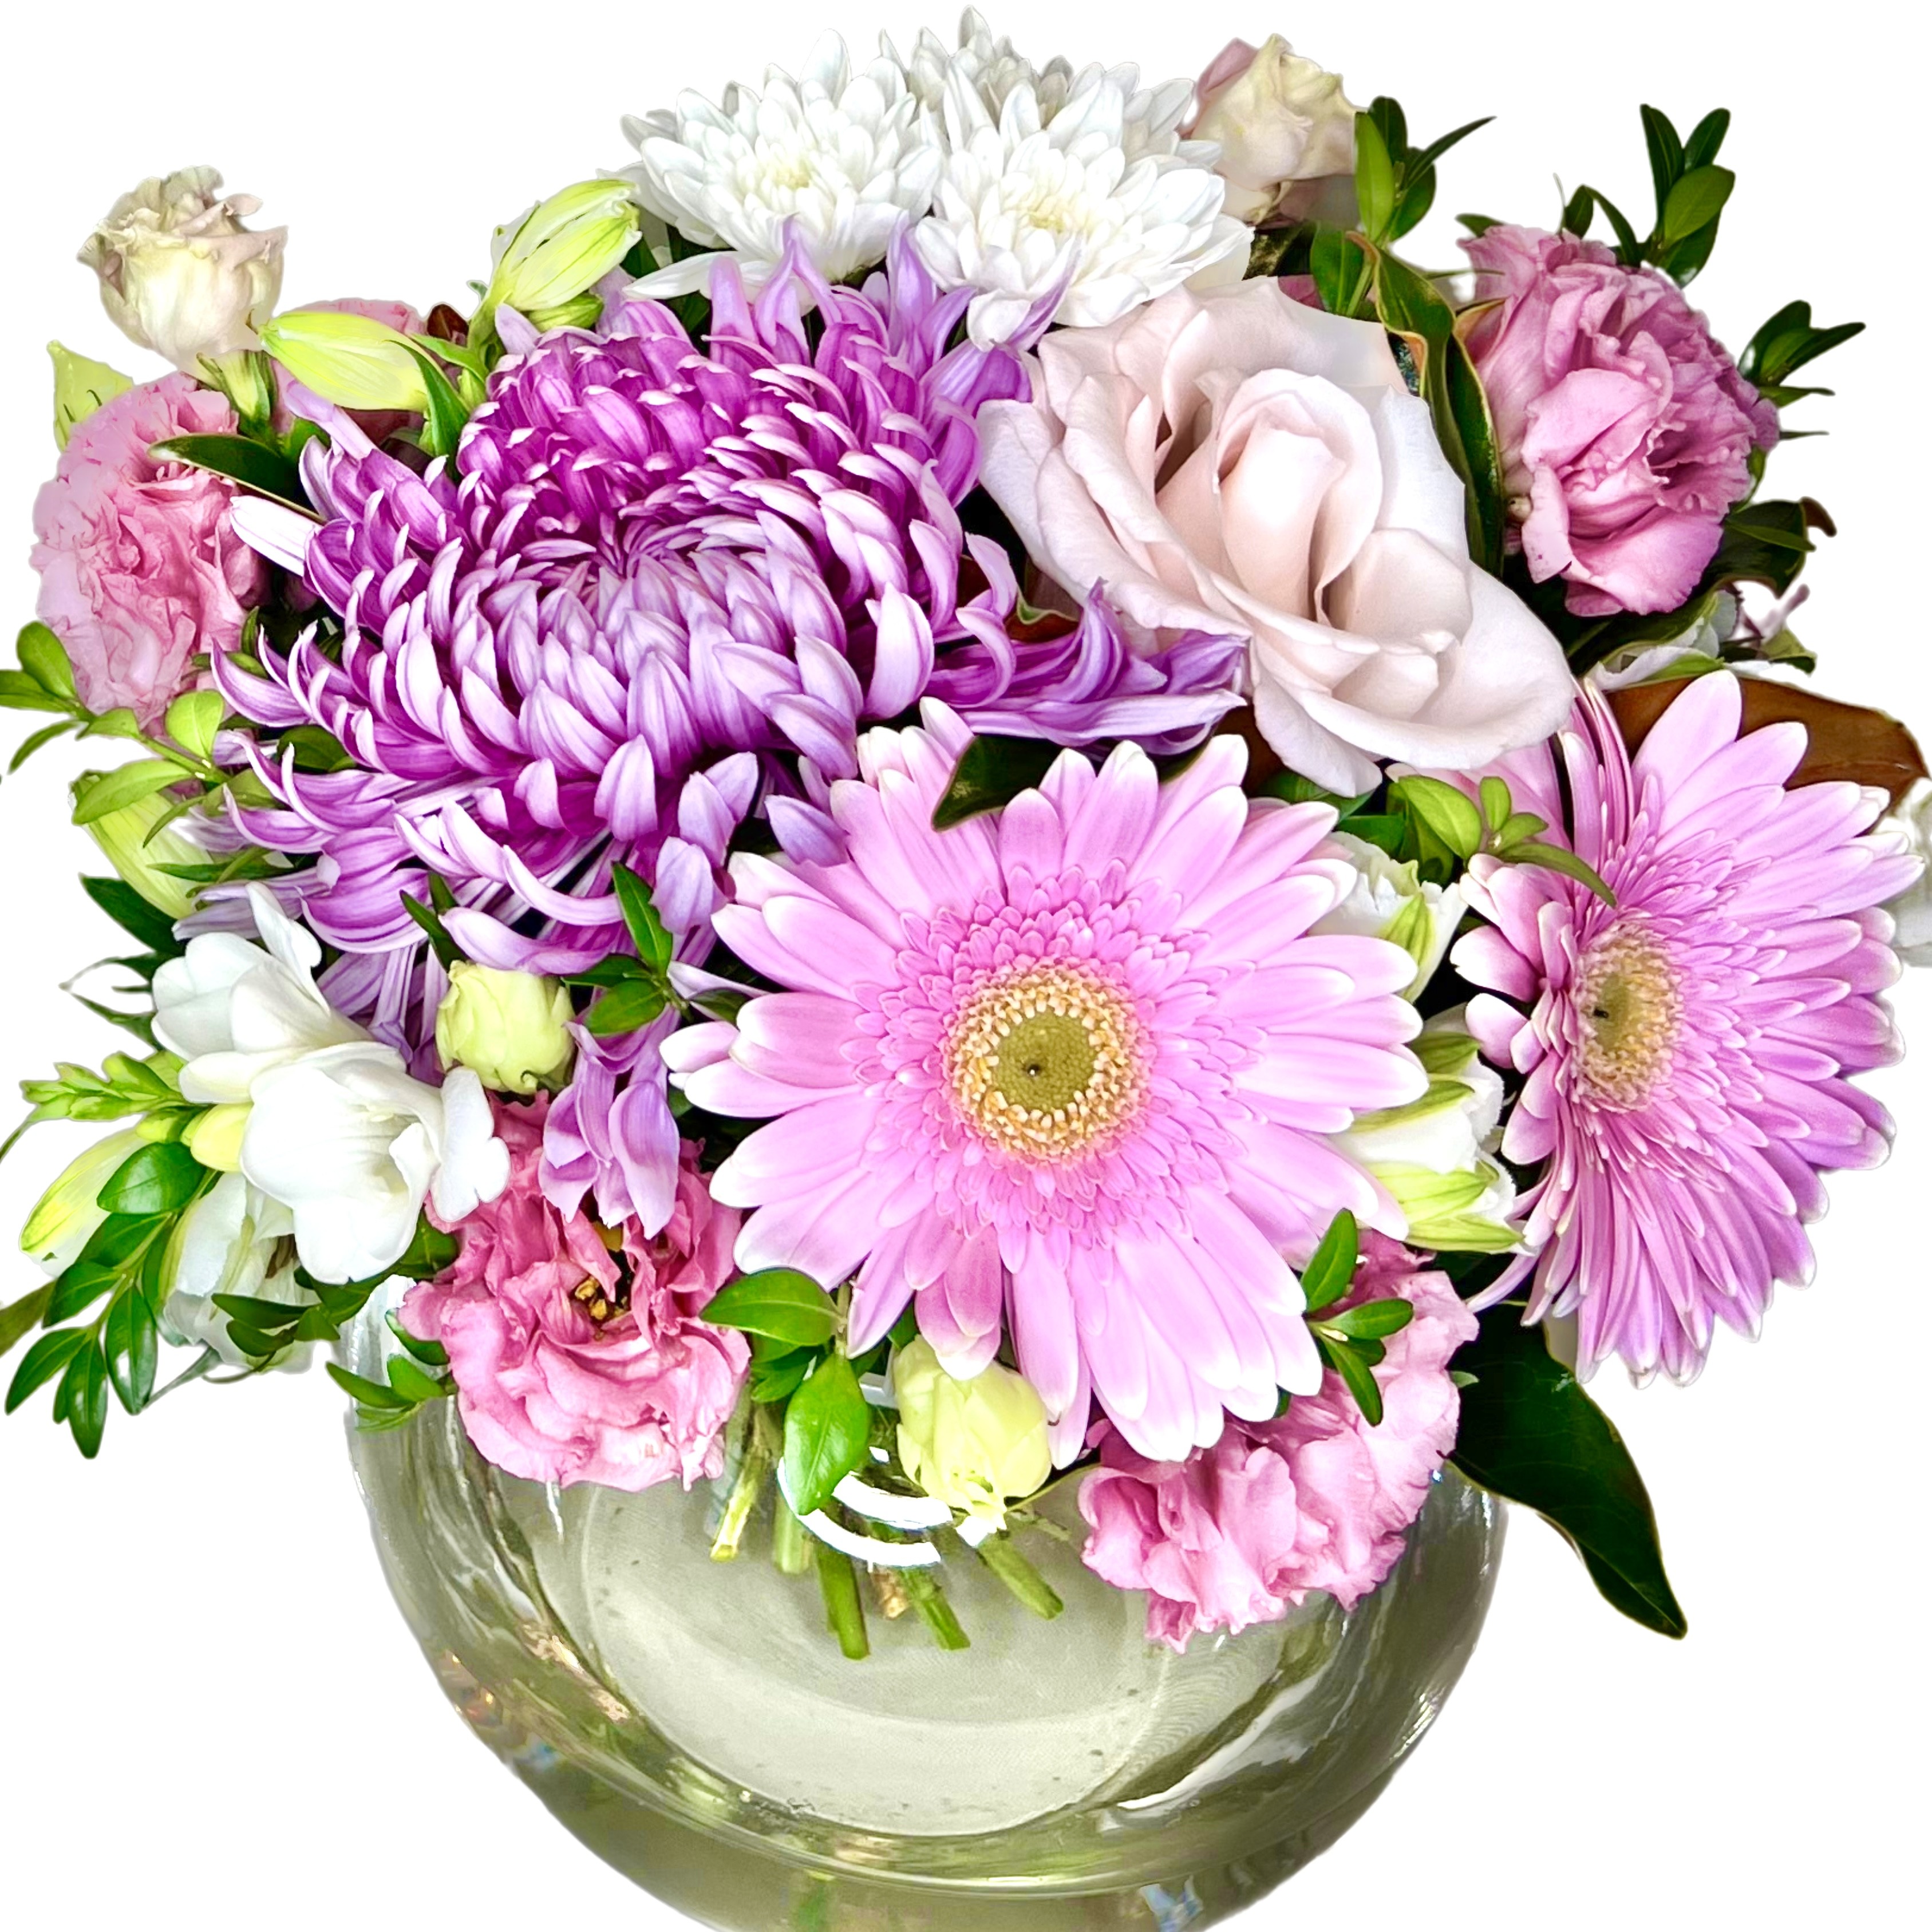 Fishbowl Vase of Flowers - Florist Choice